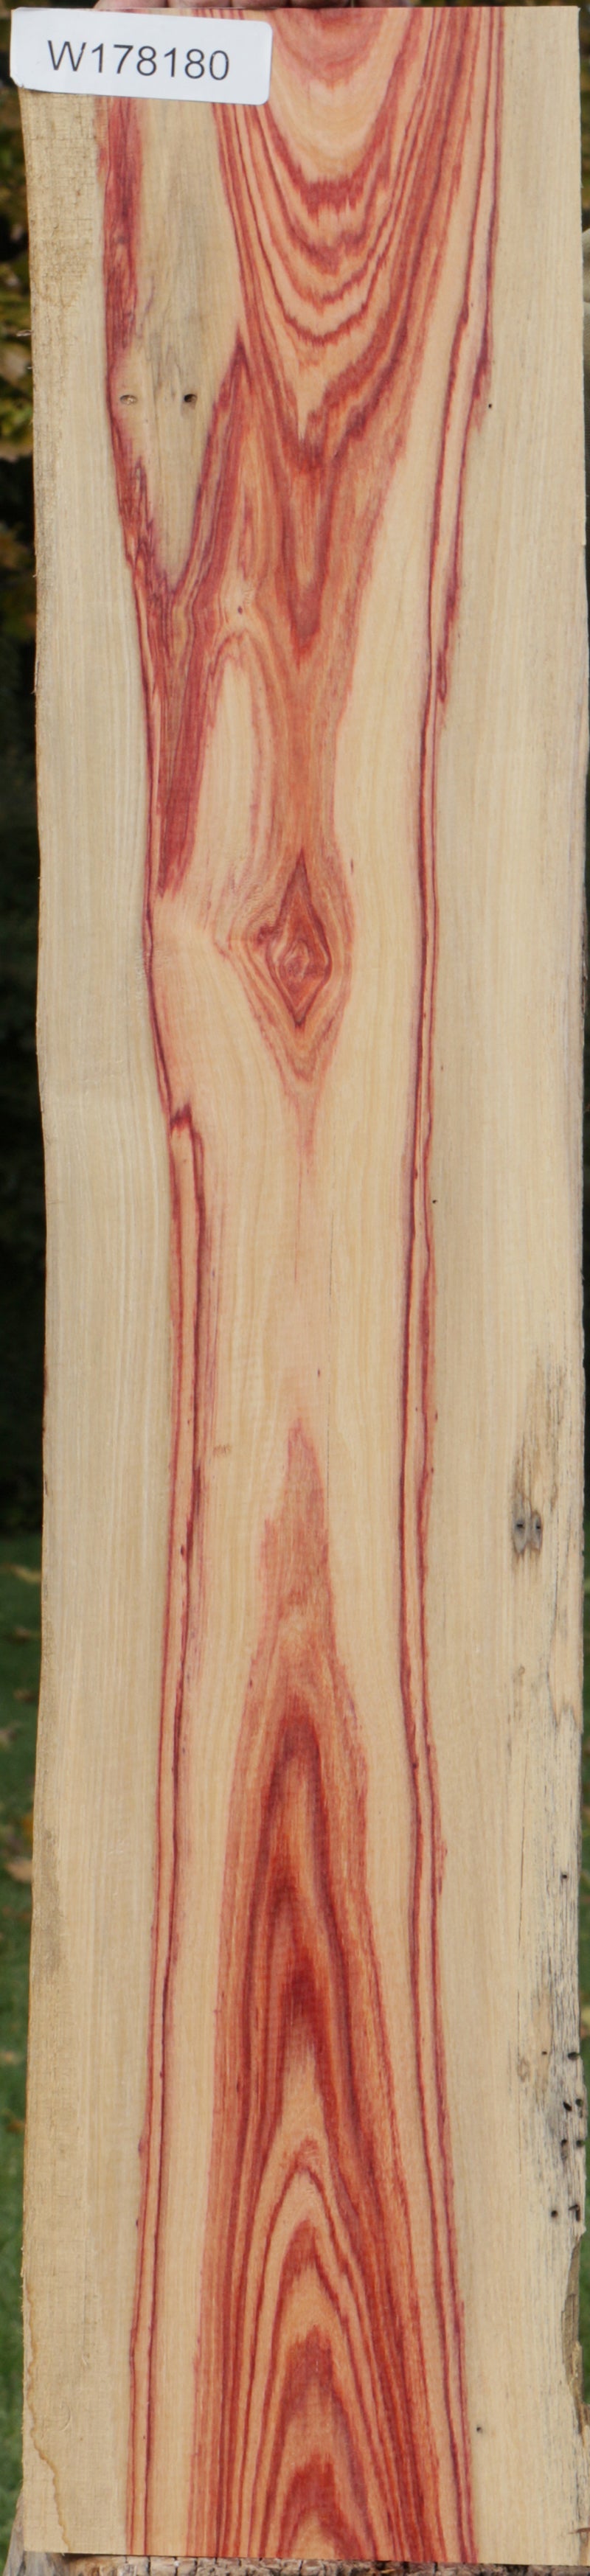 Live Edge Tulipwood Lumber